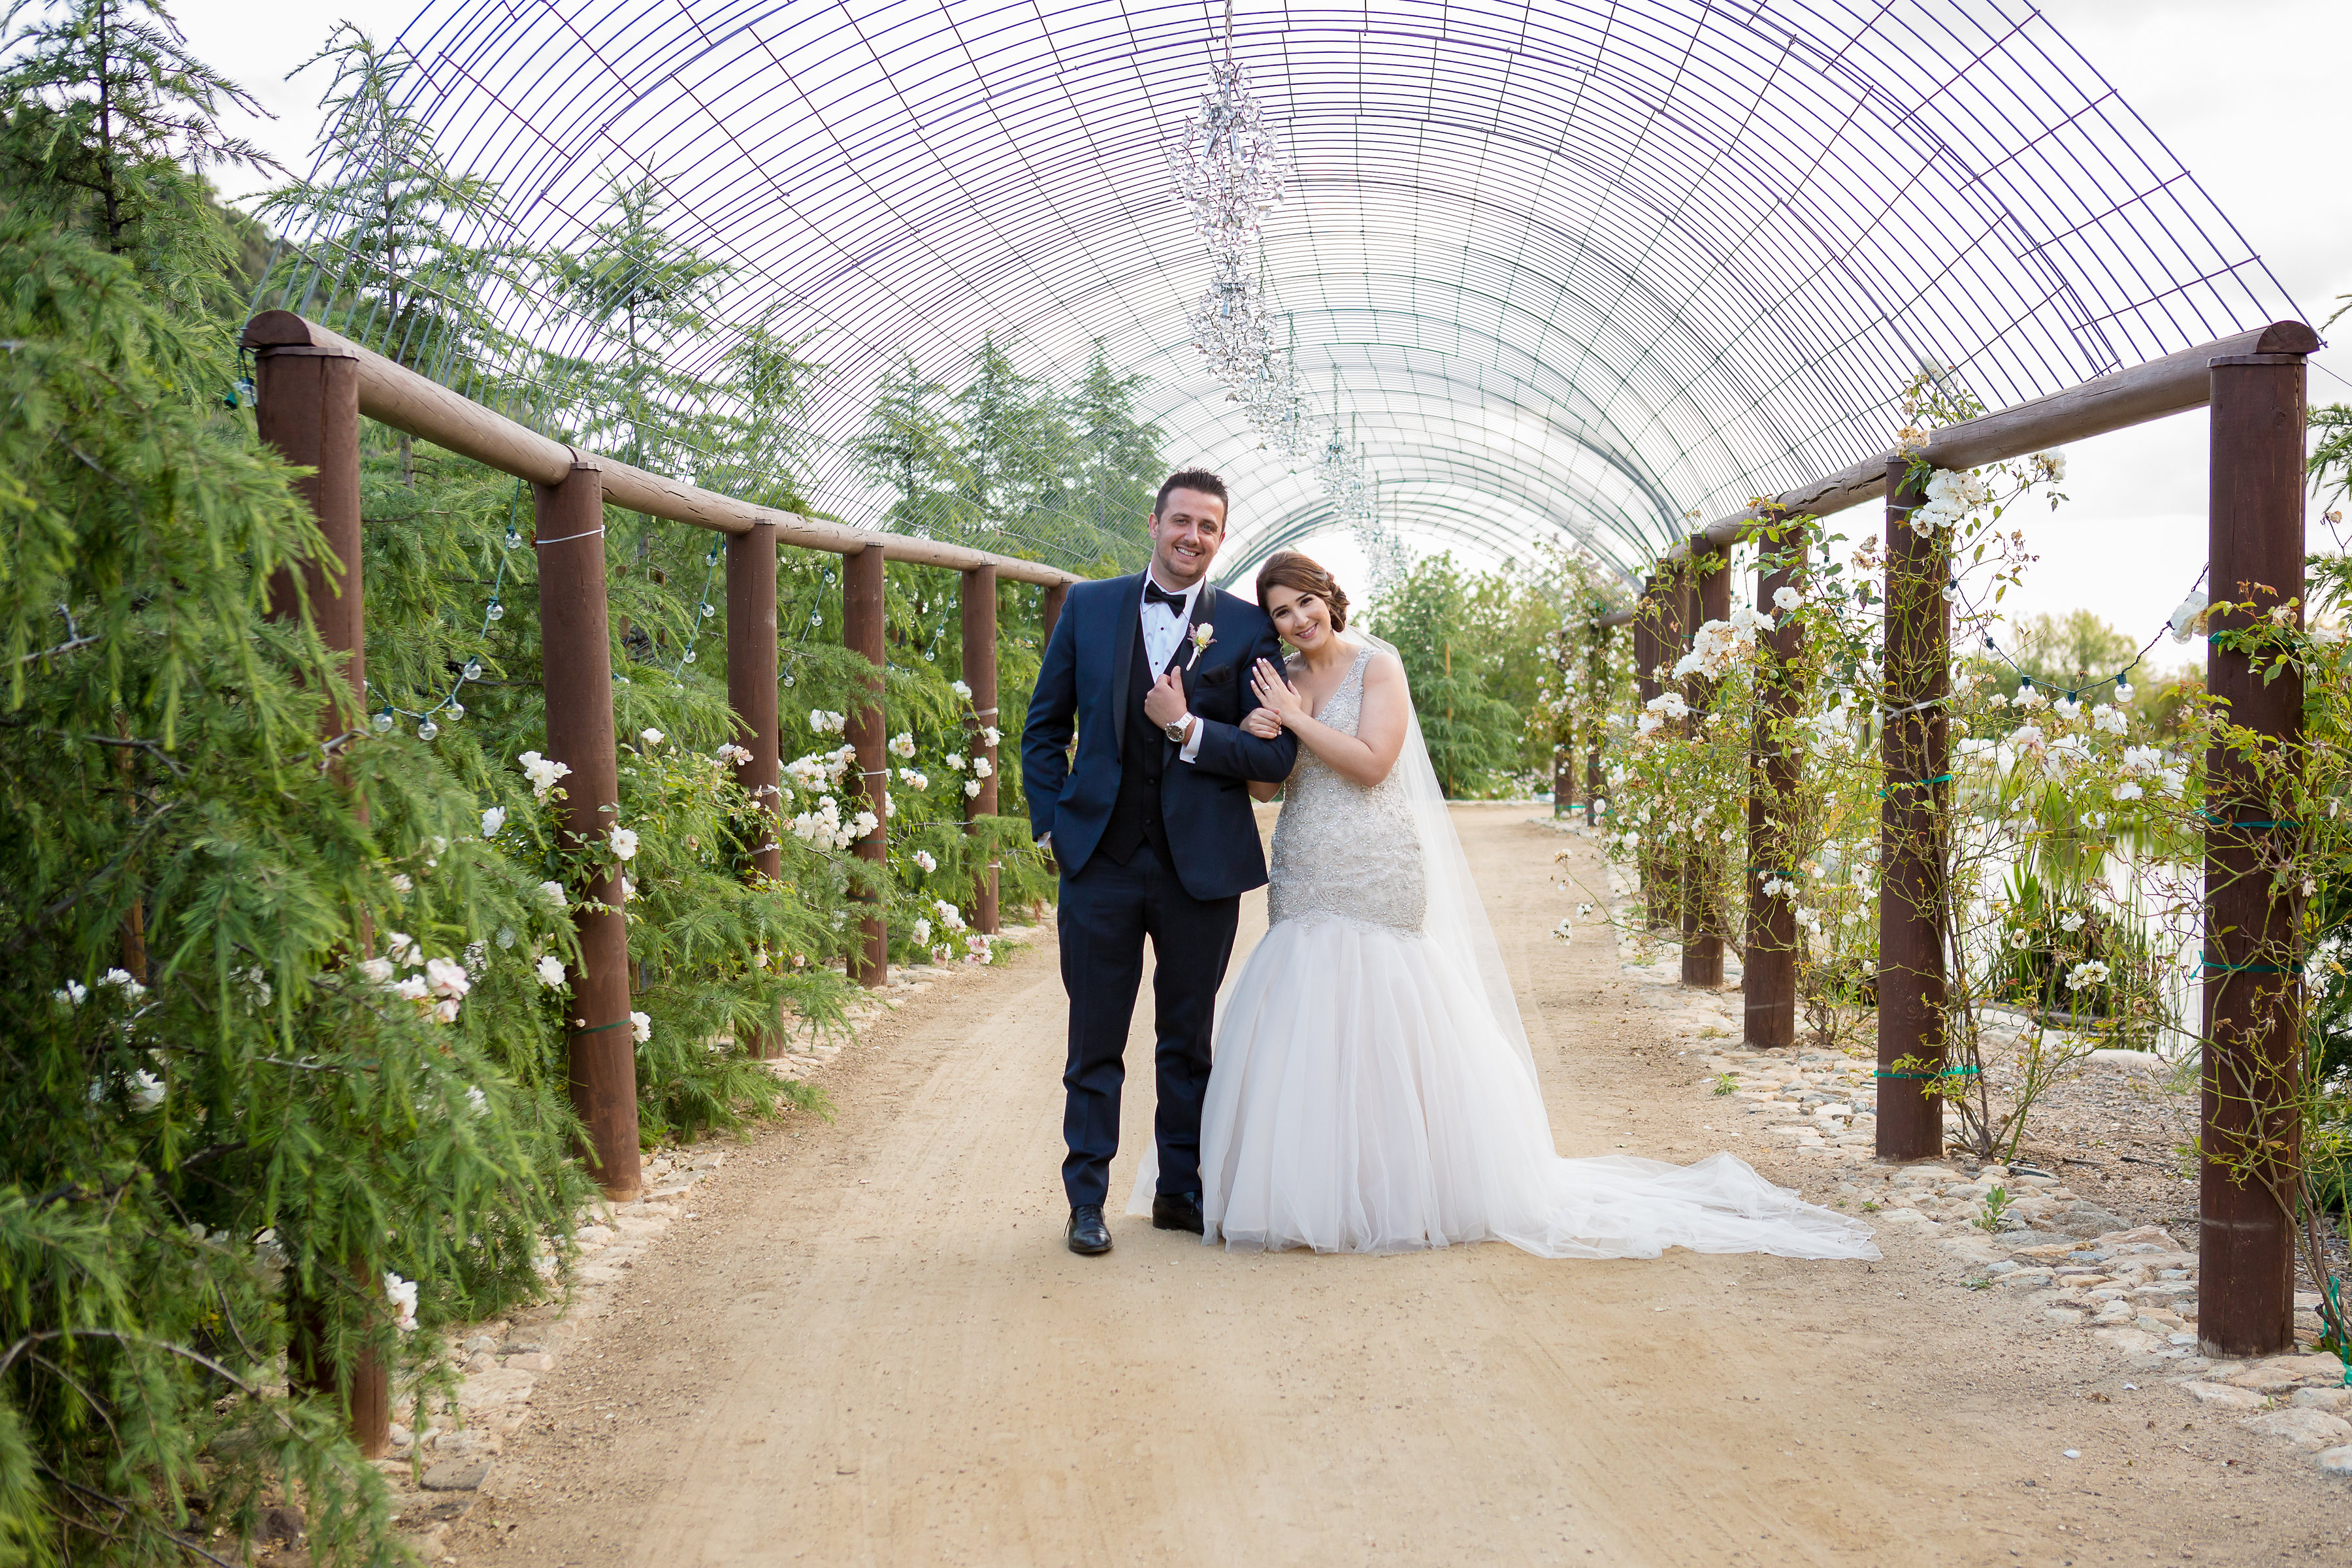 darlene and diego breathtaking wedding- couple on pathway